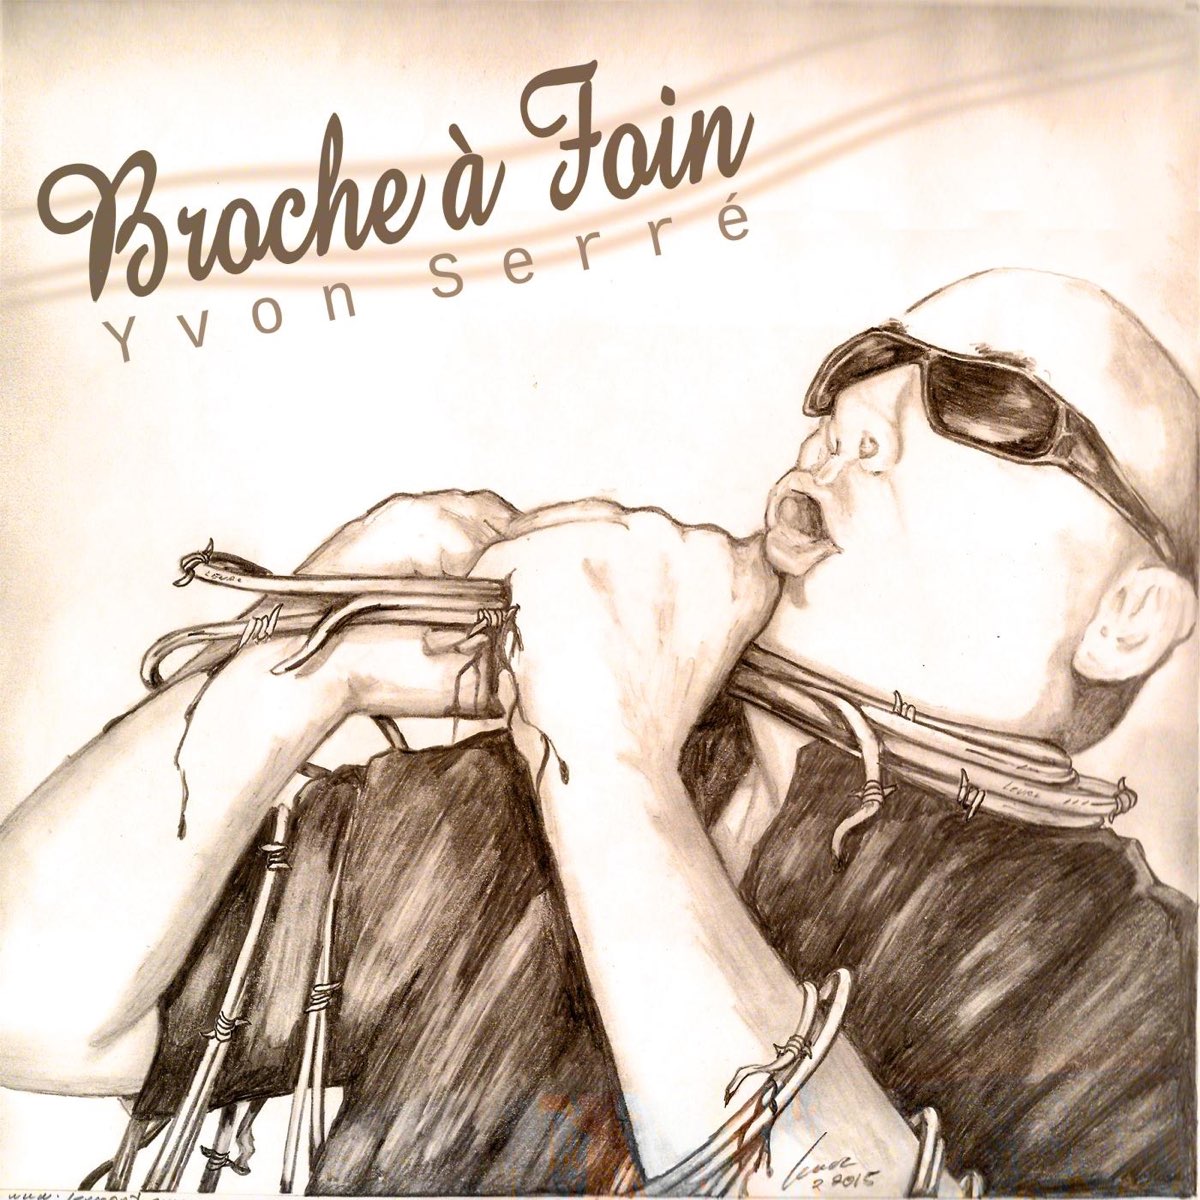 Broche a foin by Yvon Serré on Apple Music